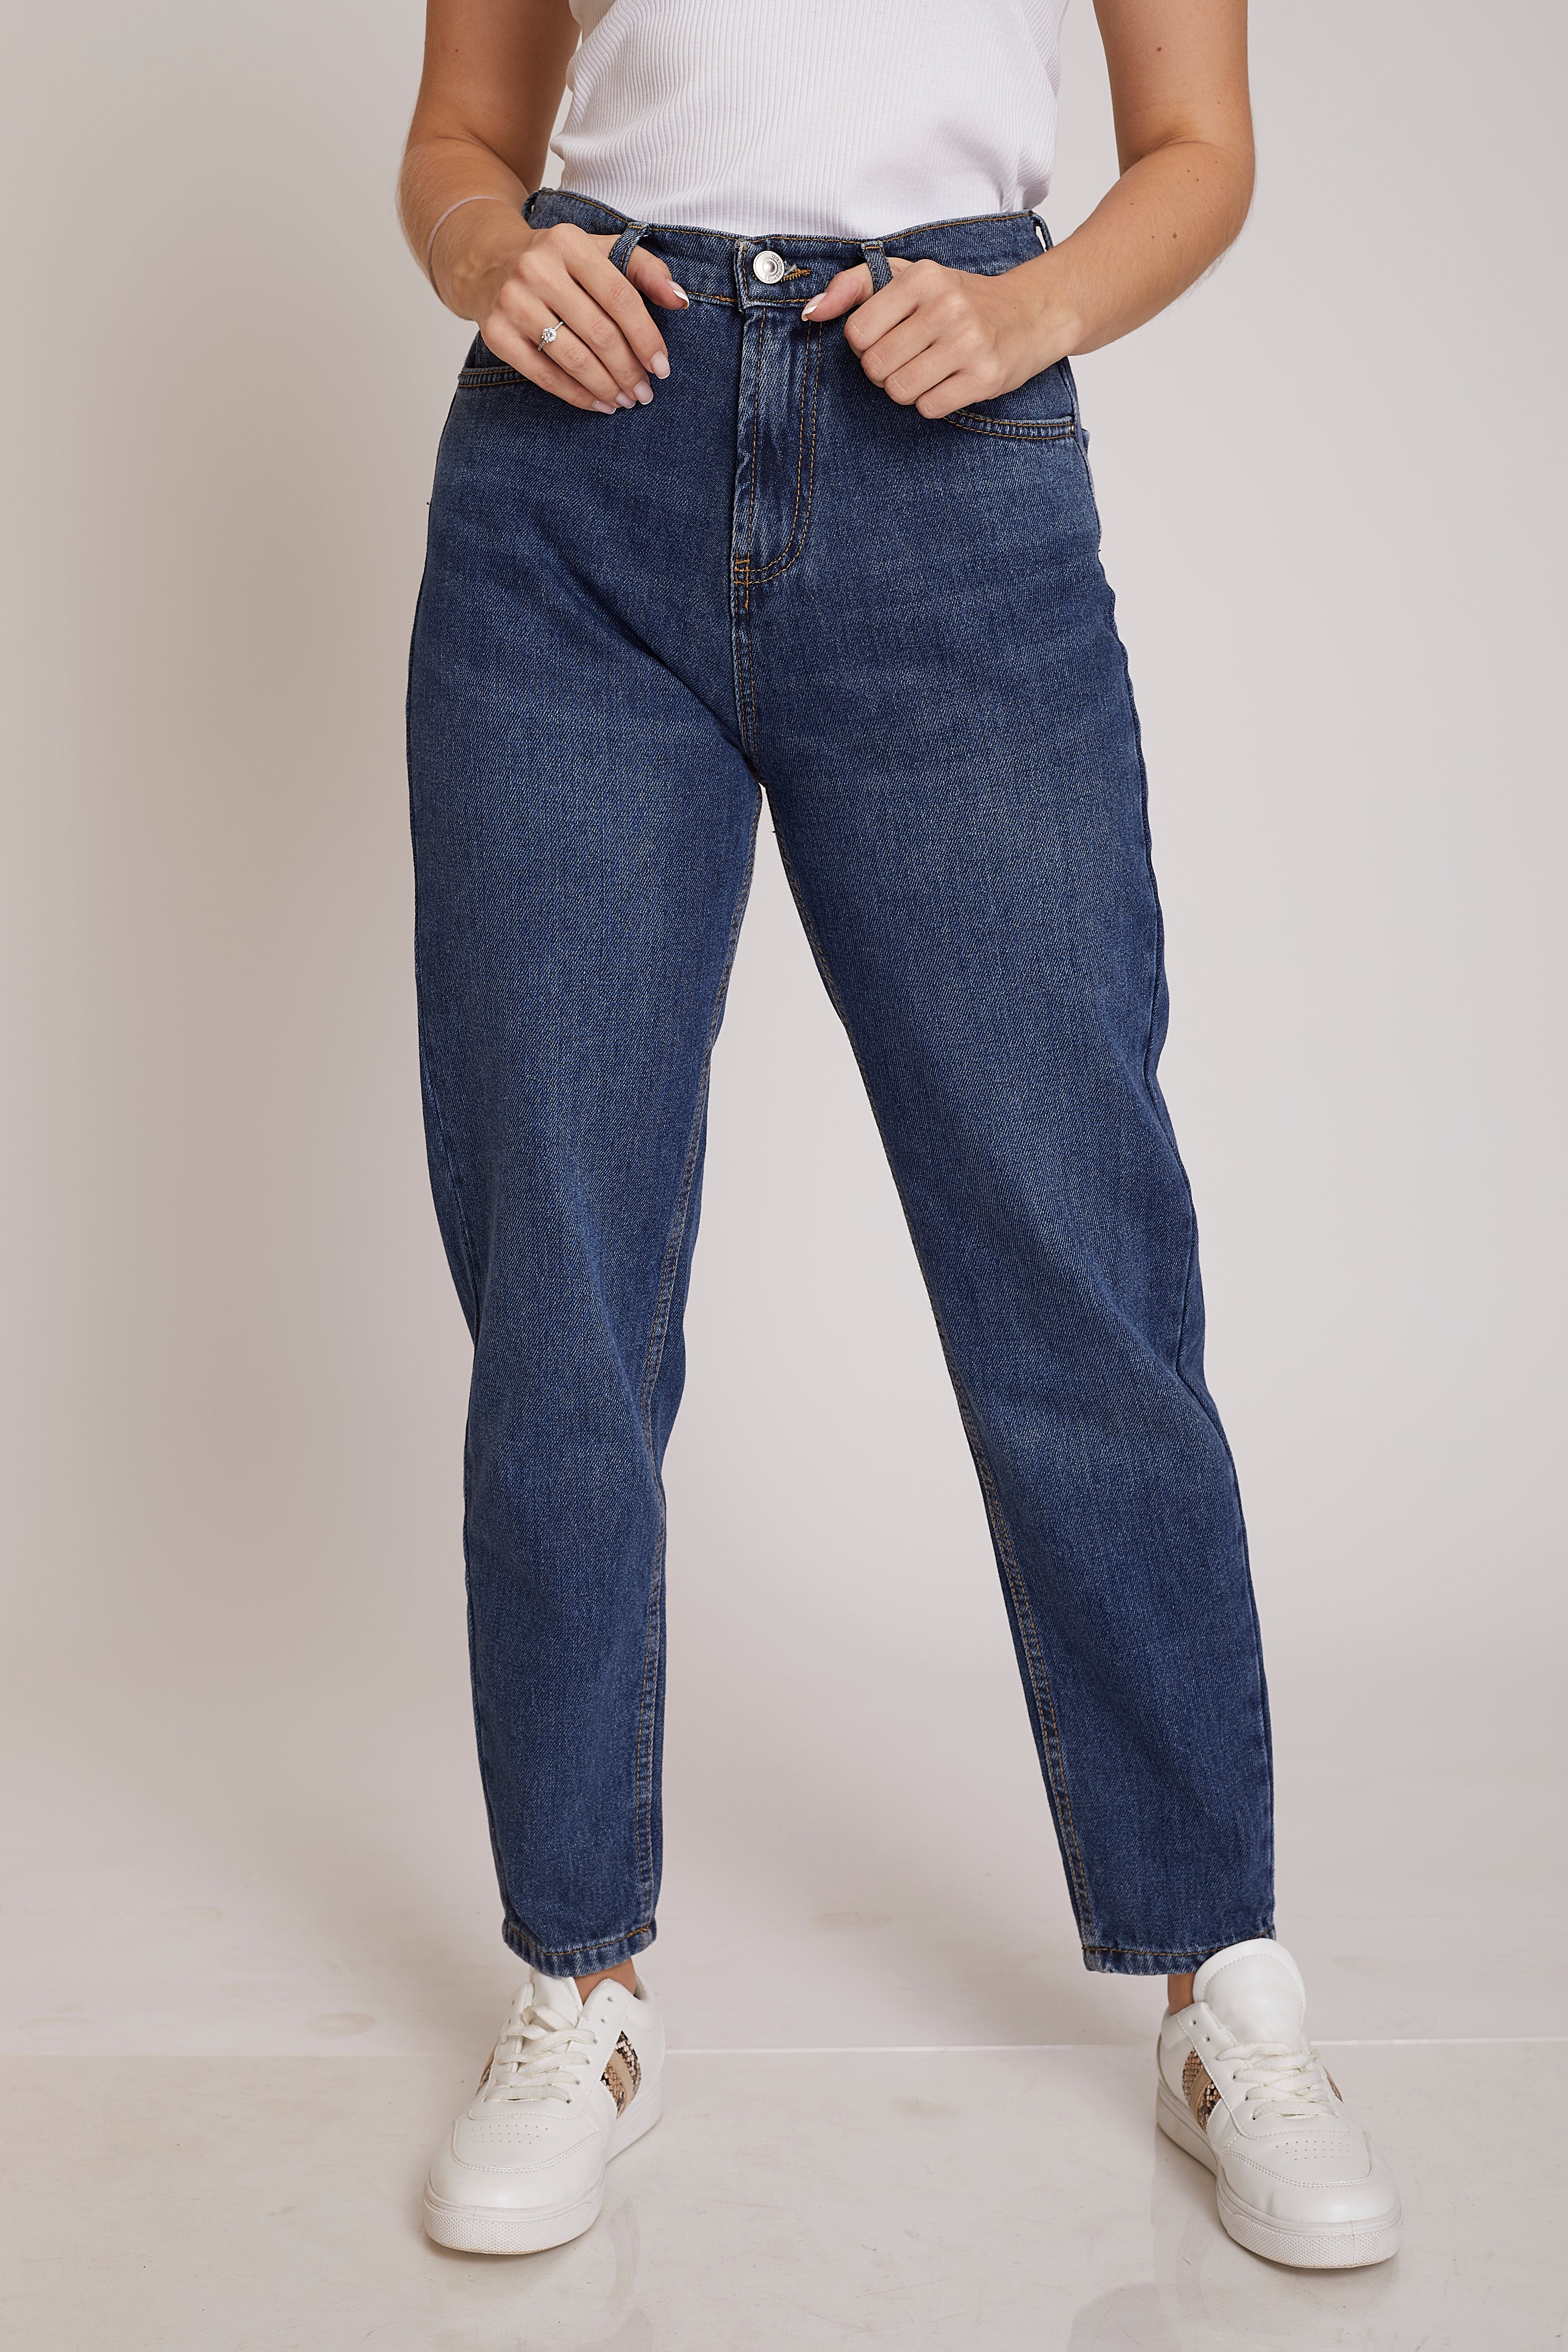 Buy BELLISKEY Blue High Rise Denim Regular Fit Women's Jeans | Shoppers Stop